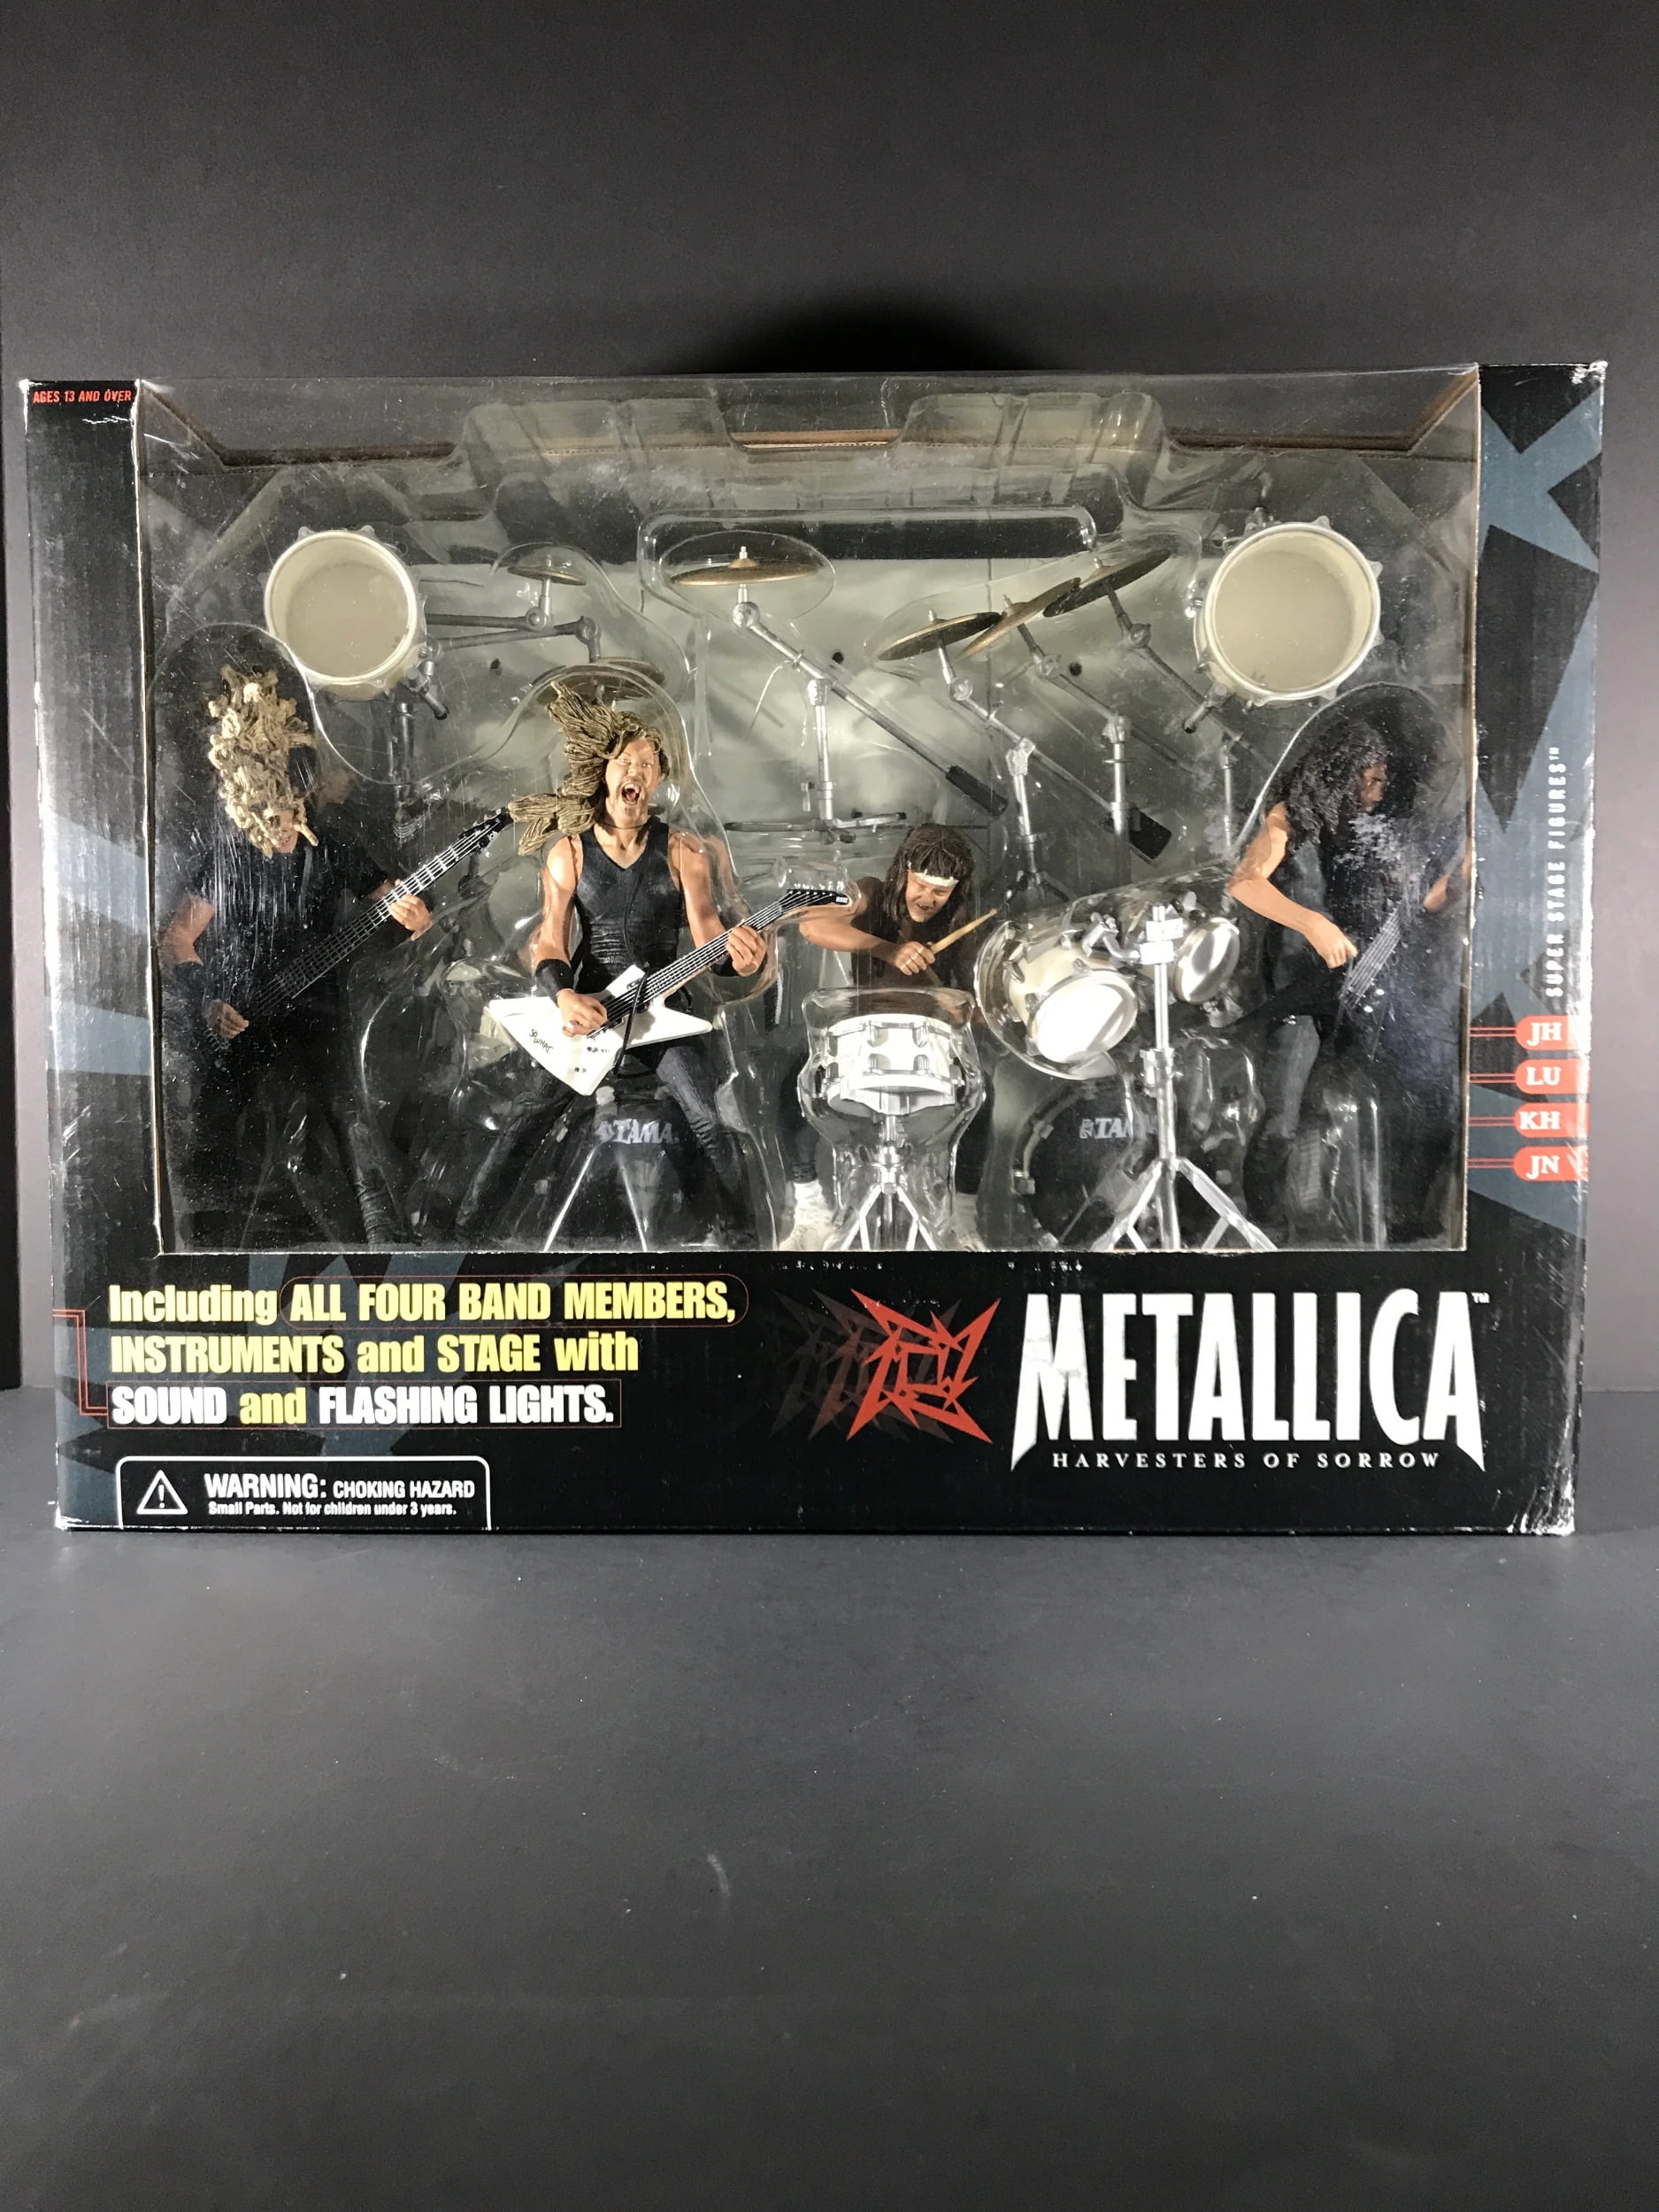 Mcfarlane Limited Edition Box Set Metallica: Harvesters of Sorrow 